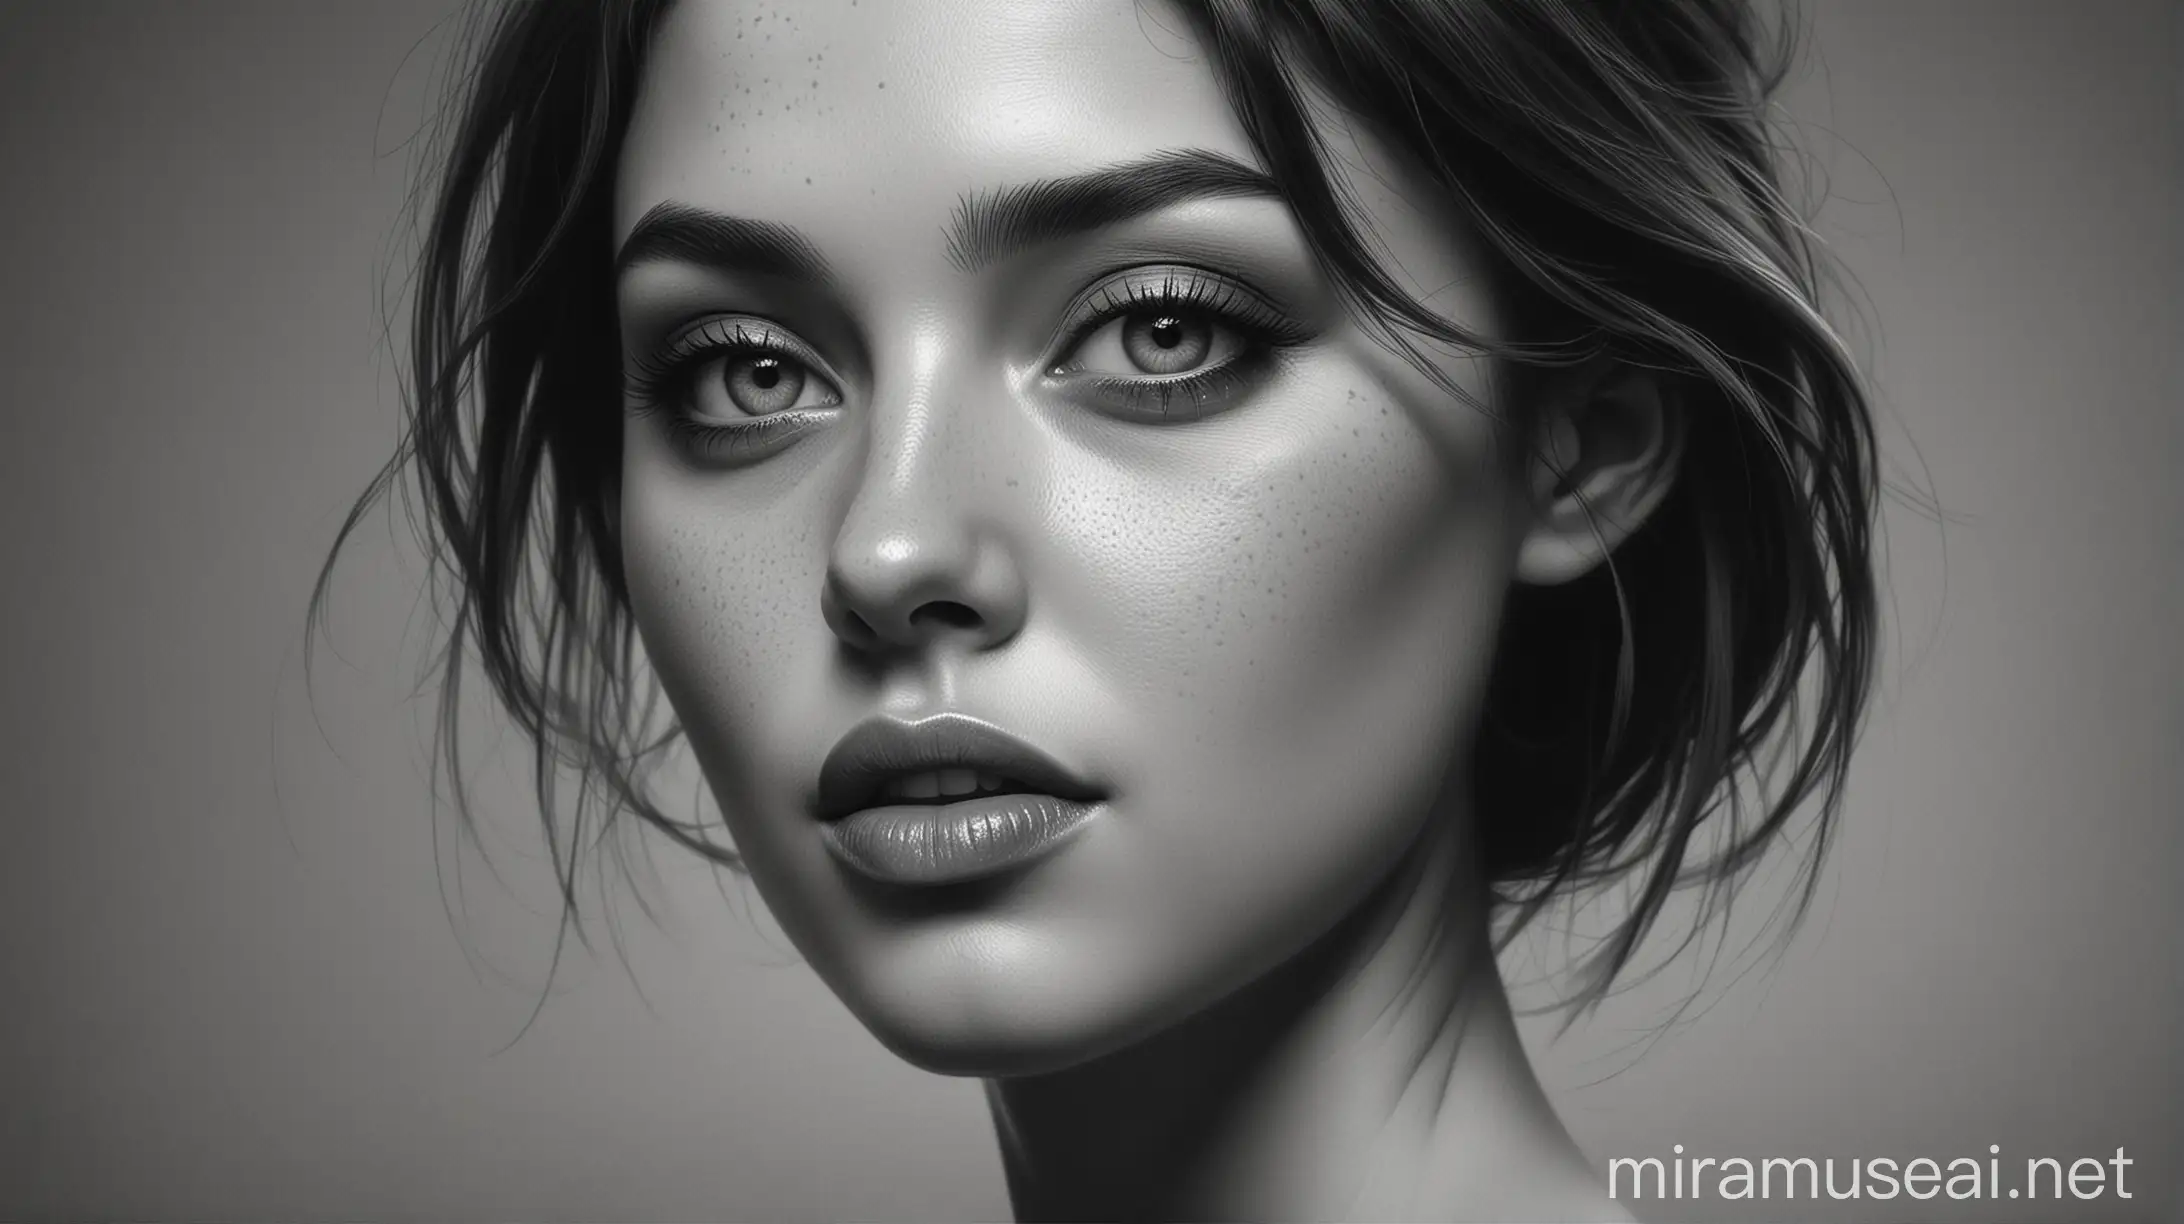 Realistic Portrait of a Woman in Grayscale Digital Art